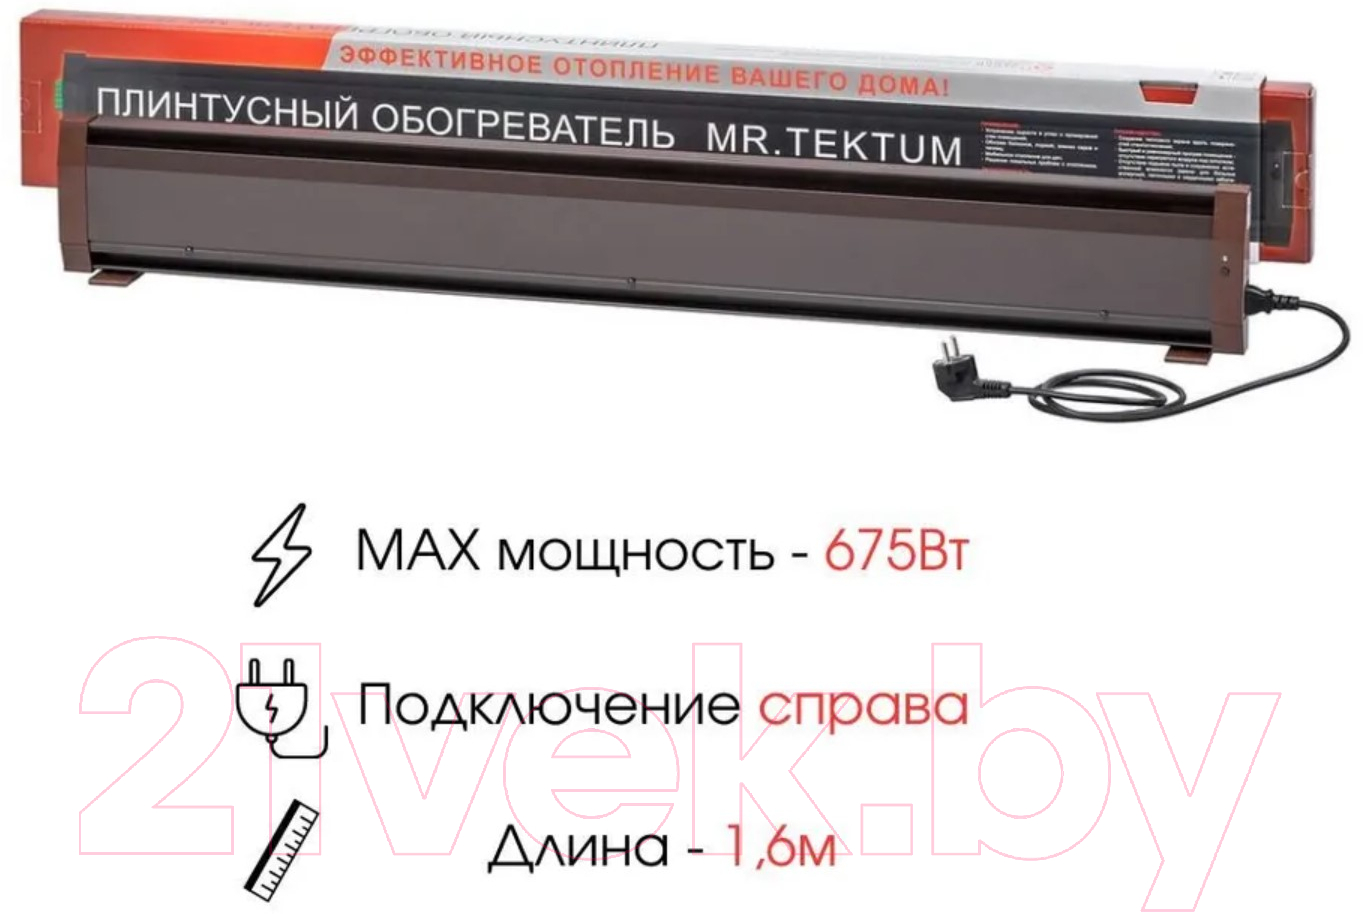 Теплый плинтус электрический Mr.Tektum Smart Line 1.6м правый